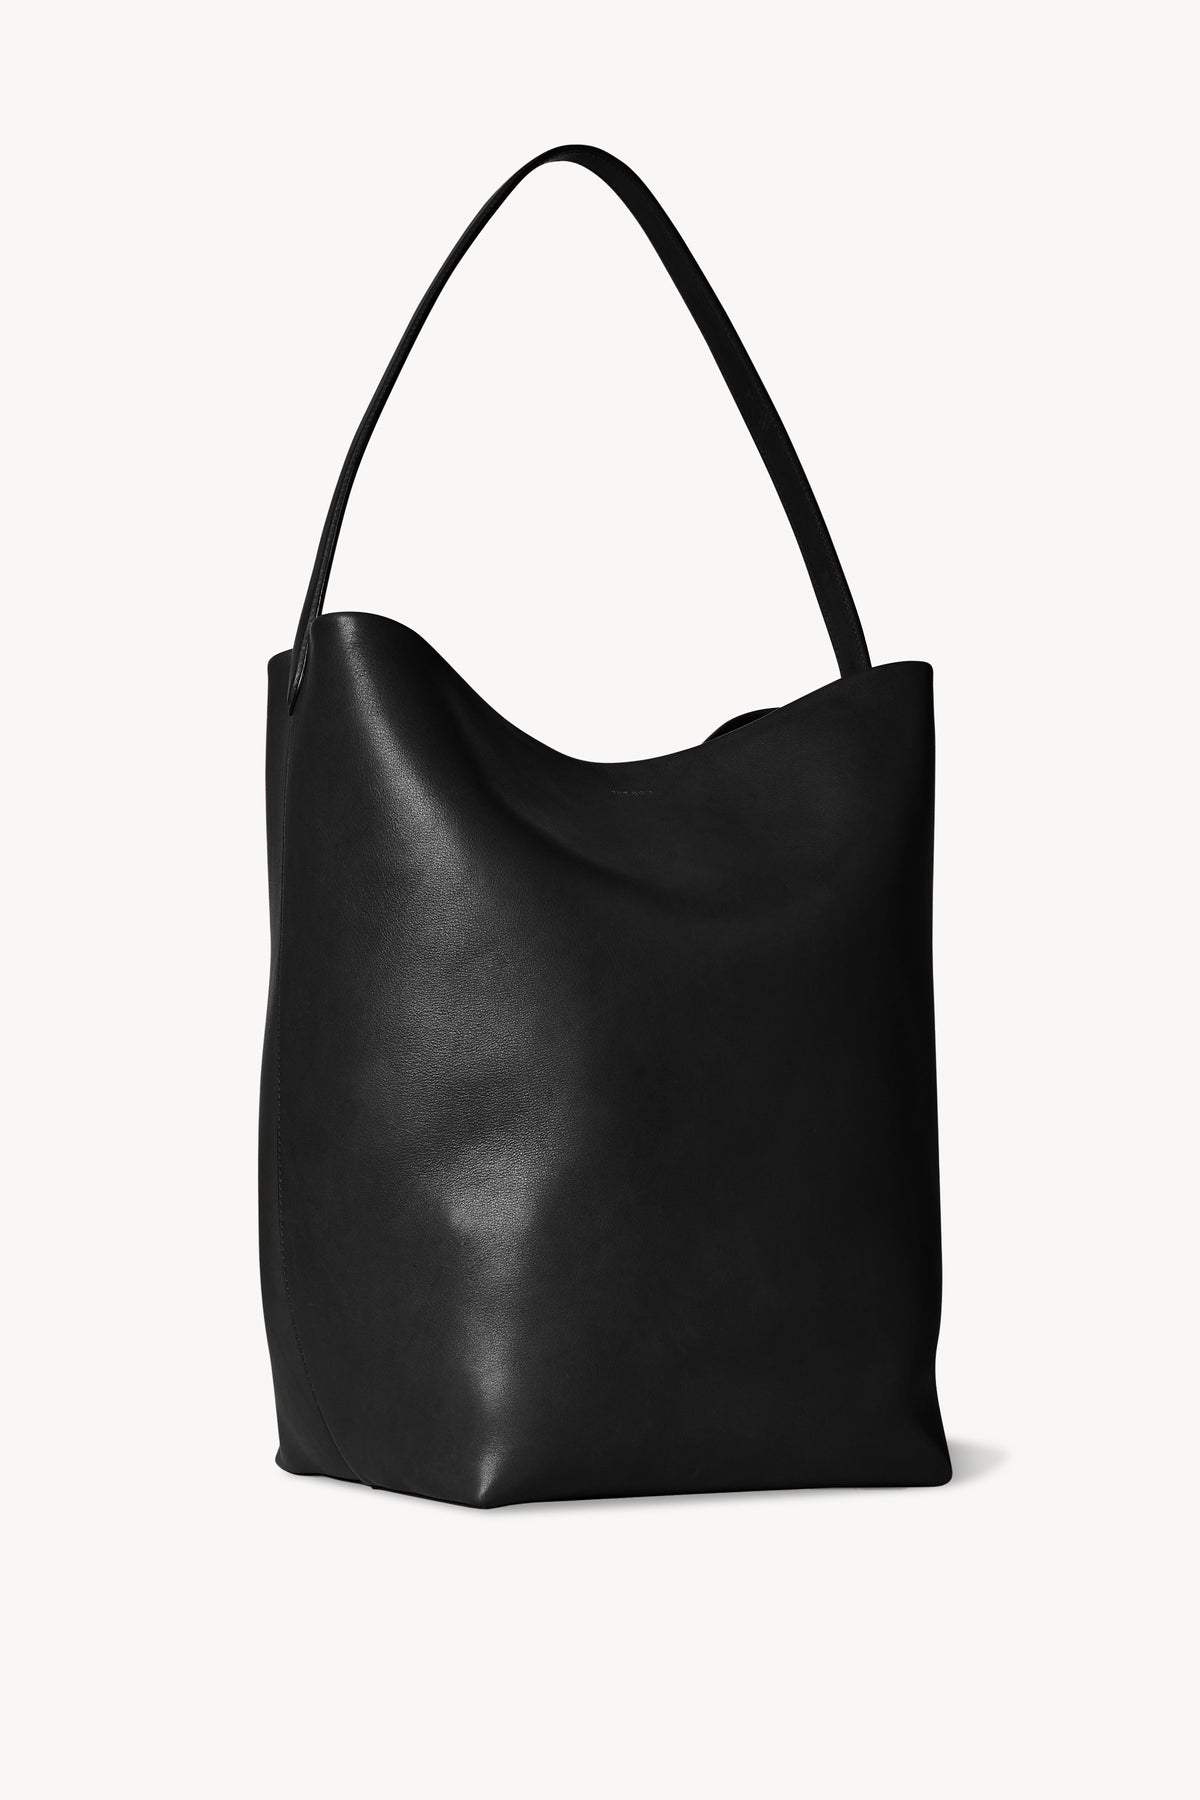 【期間限定出品】THE ROW Shopper 7 Handbag